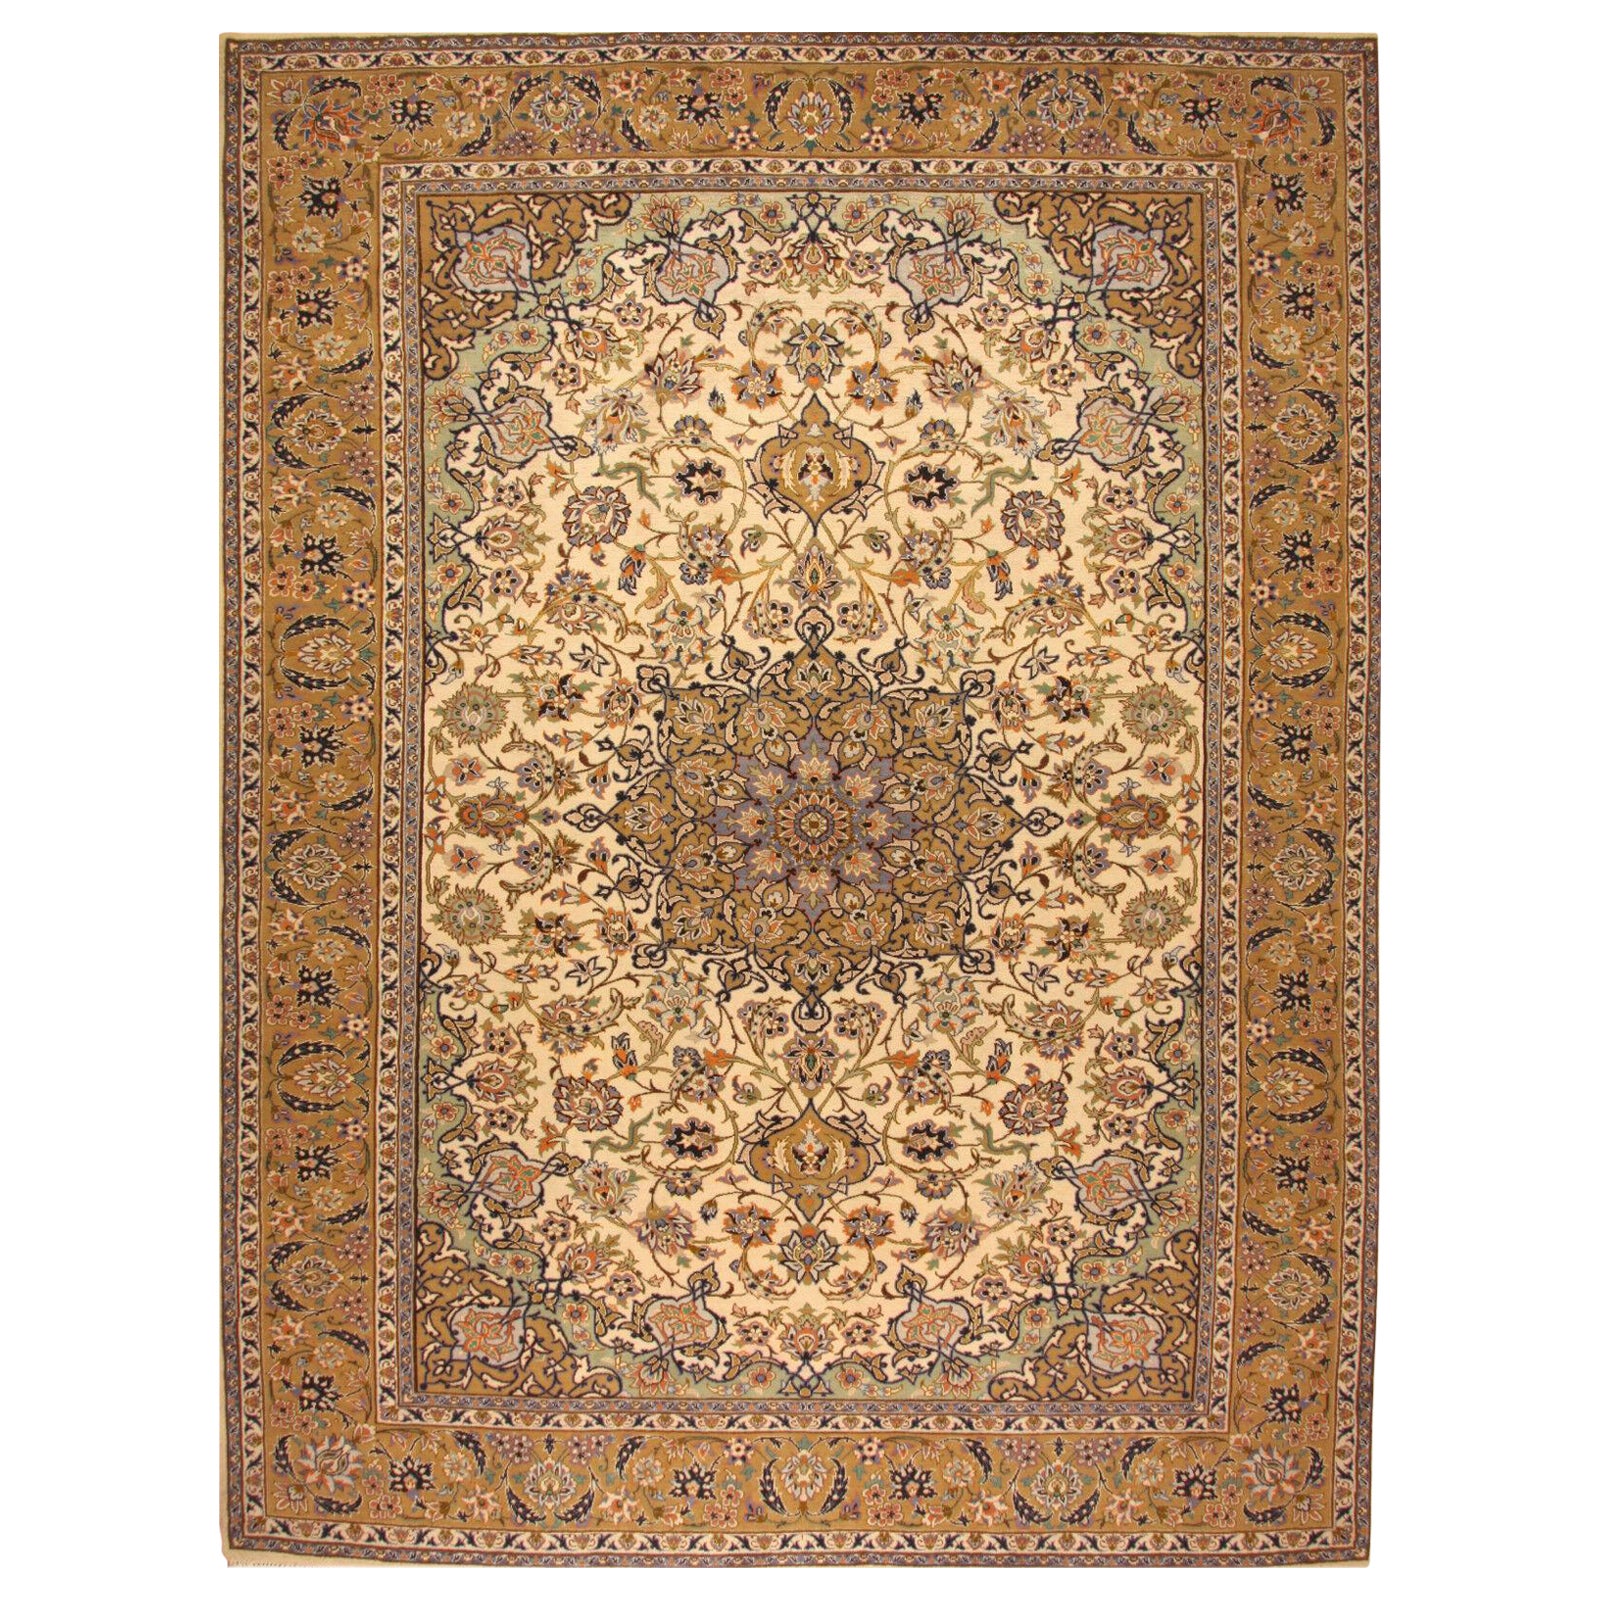 Handmade Contemporary Isfahan Rug 9.6' x 12.7' (295cm x 390cm), 2000s - 1T02 For Sale